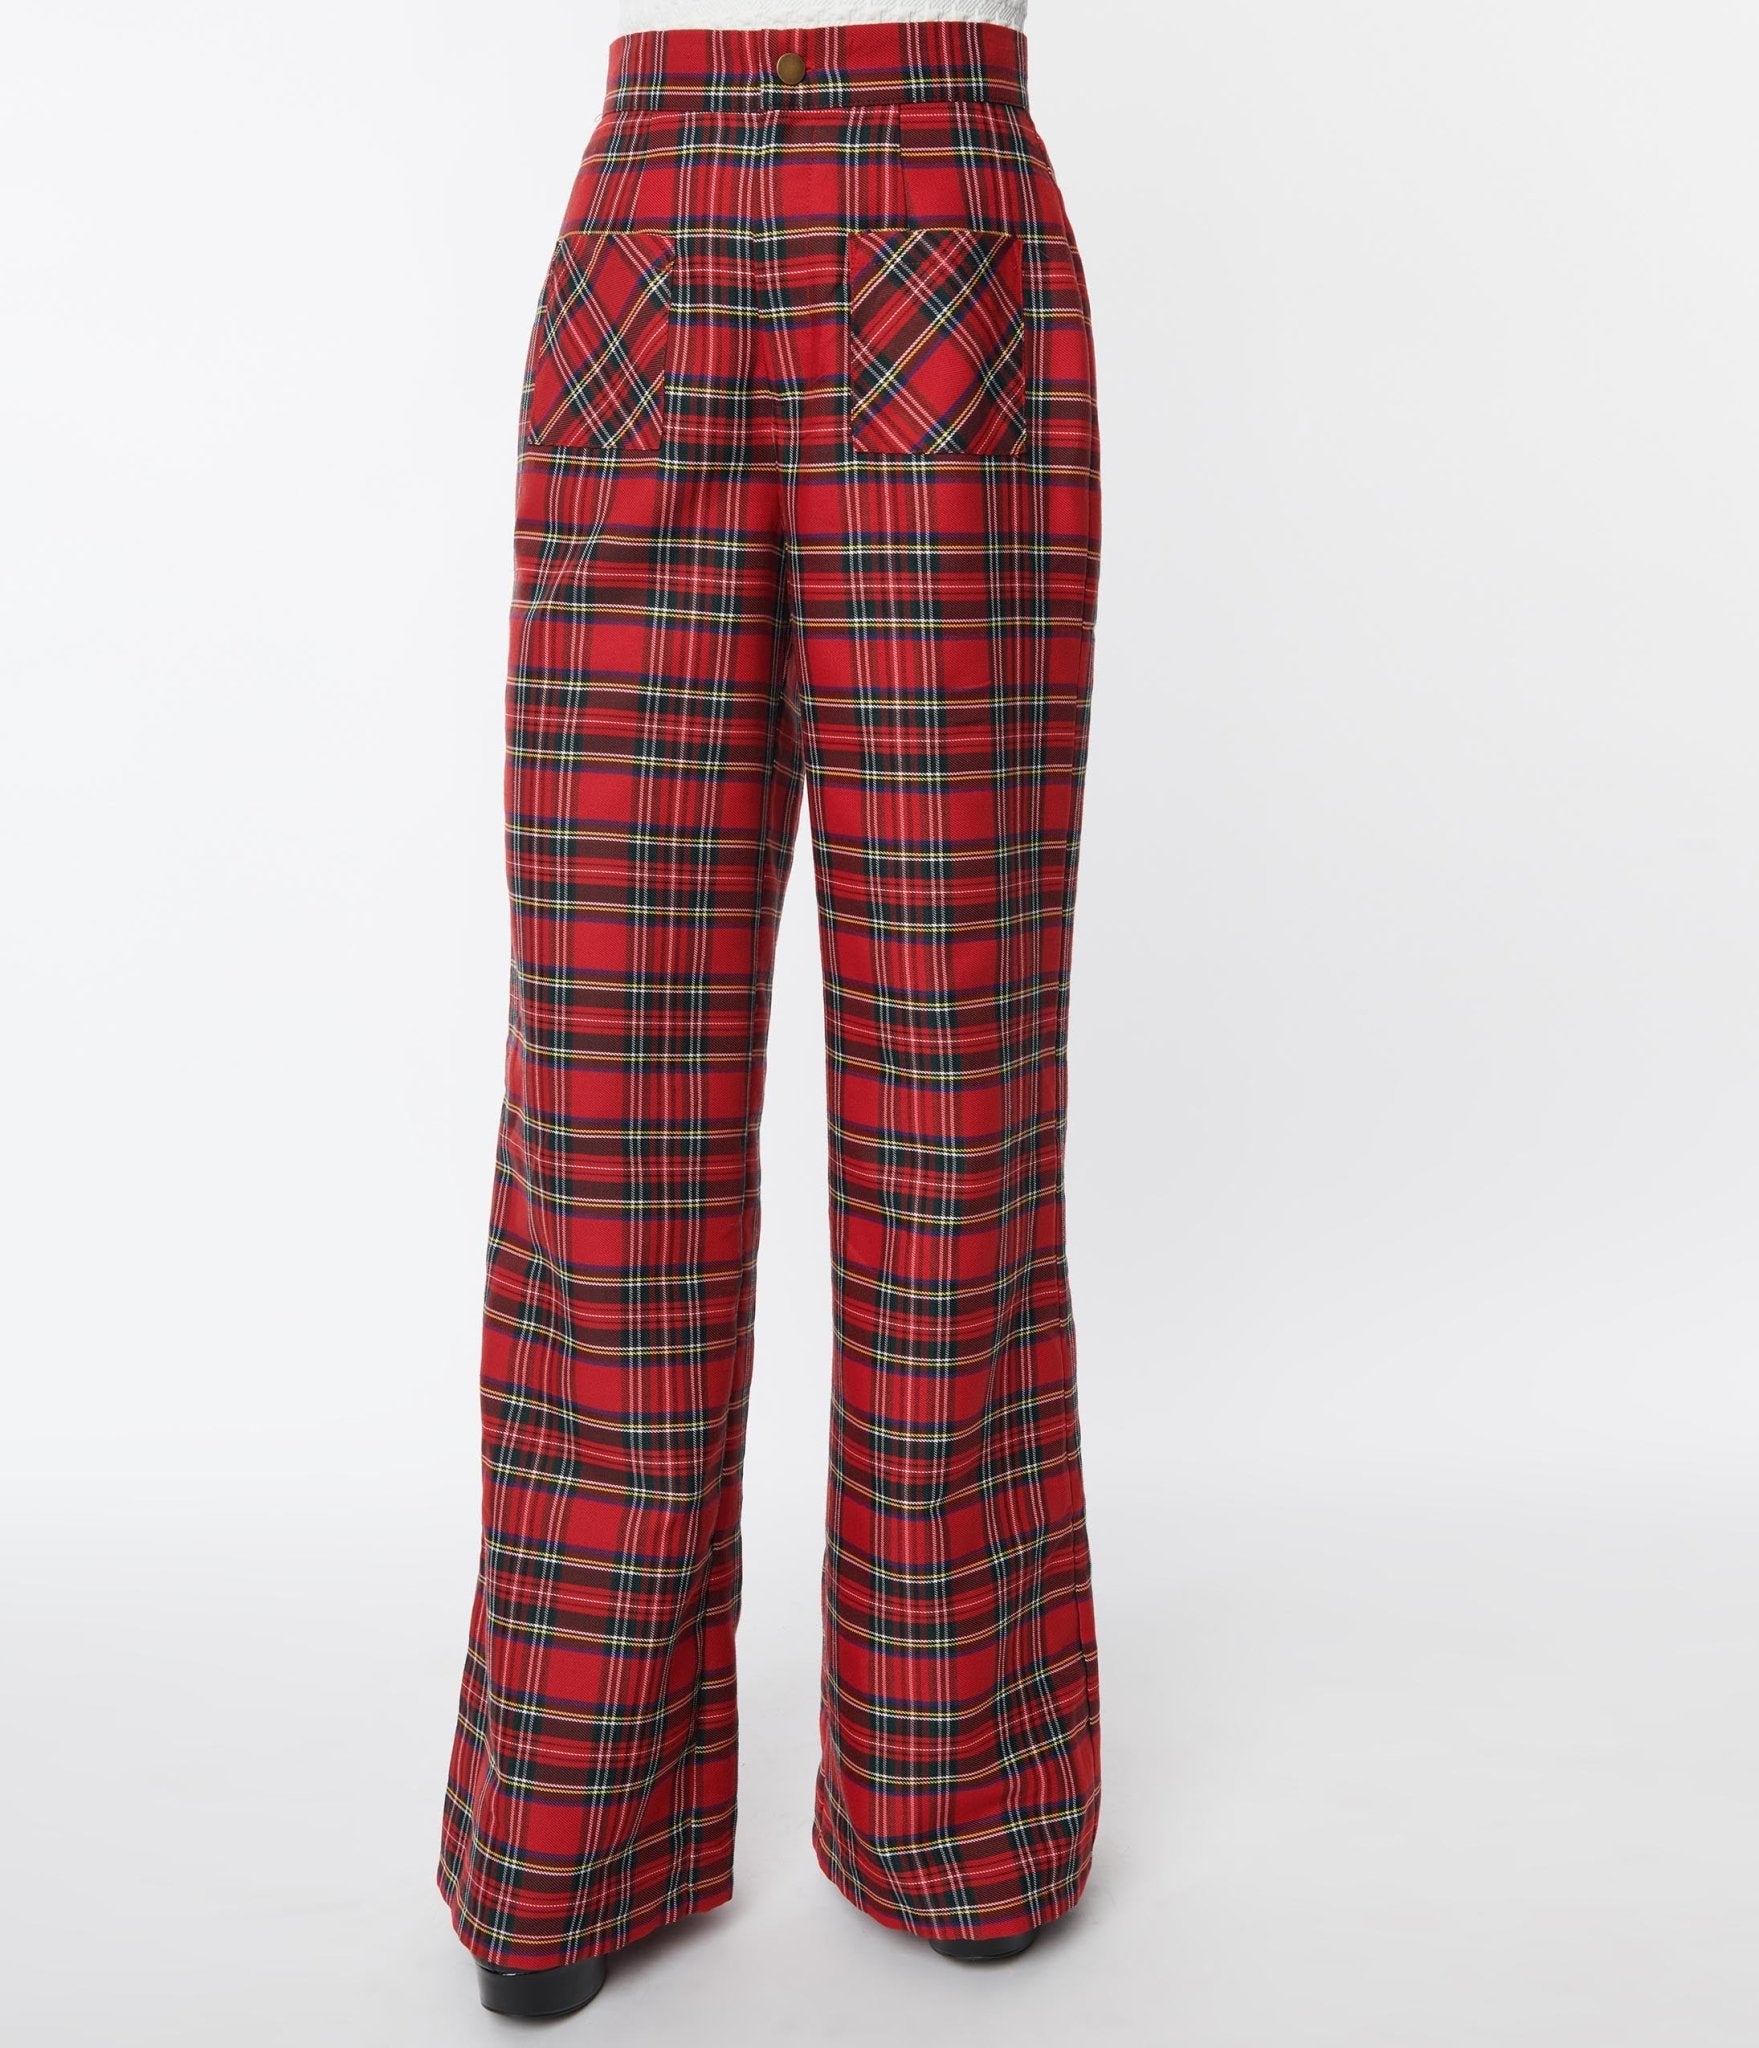 Soft Knit Plaid Pants - Classic red plaid